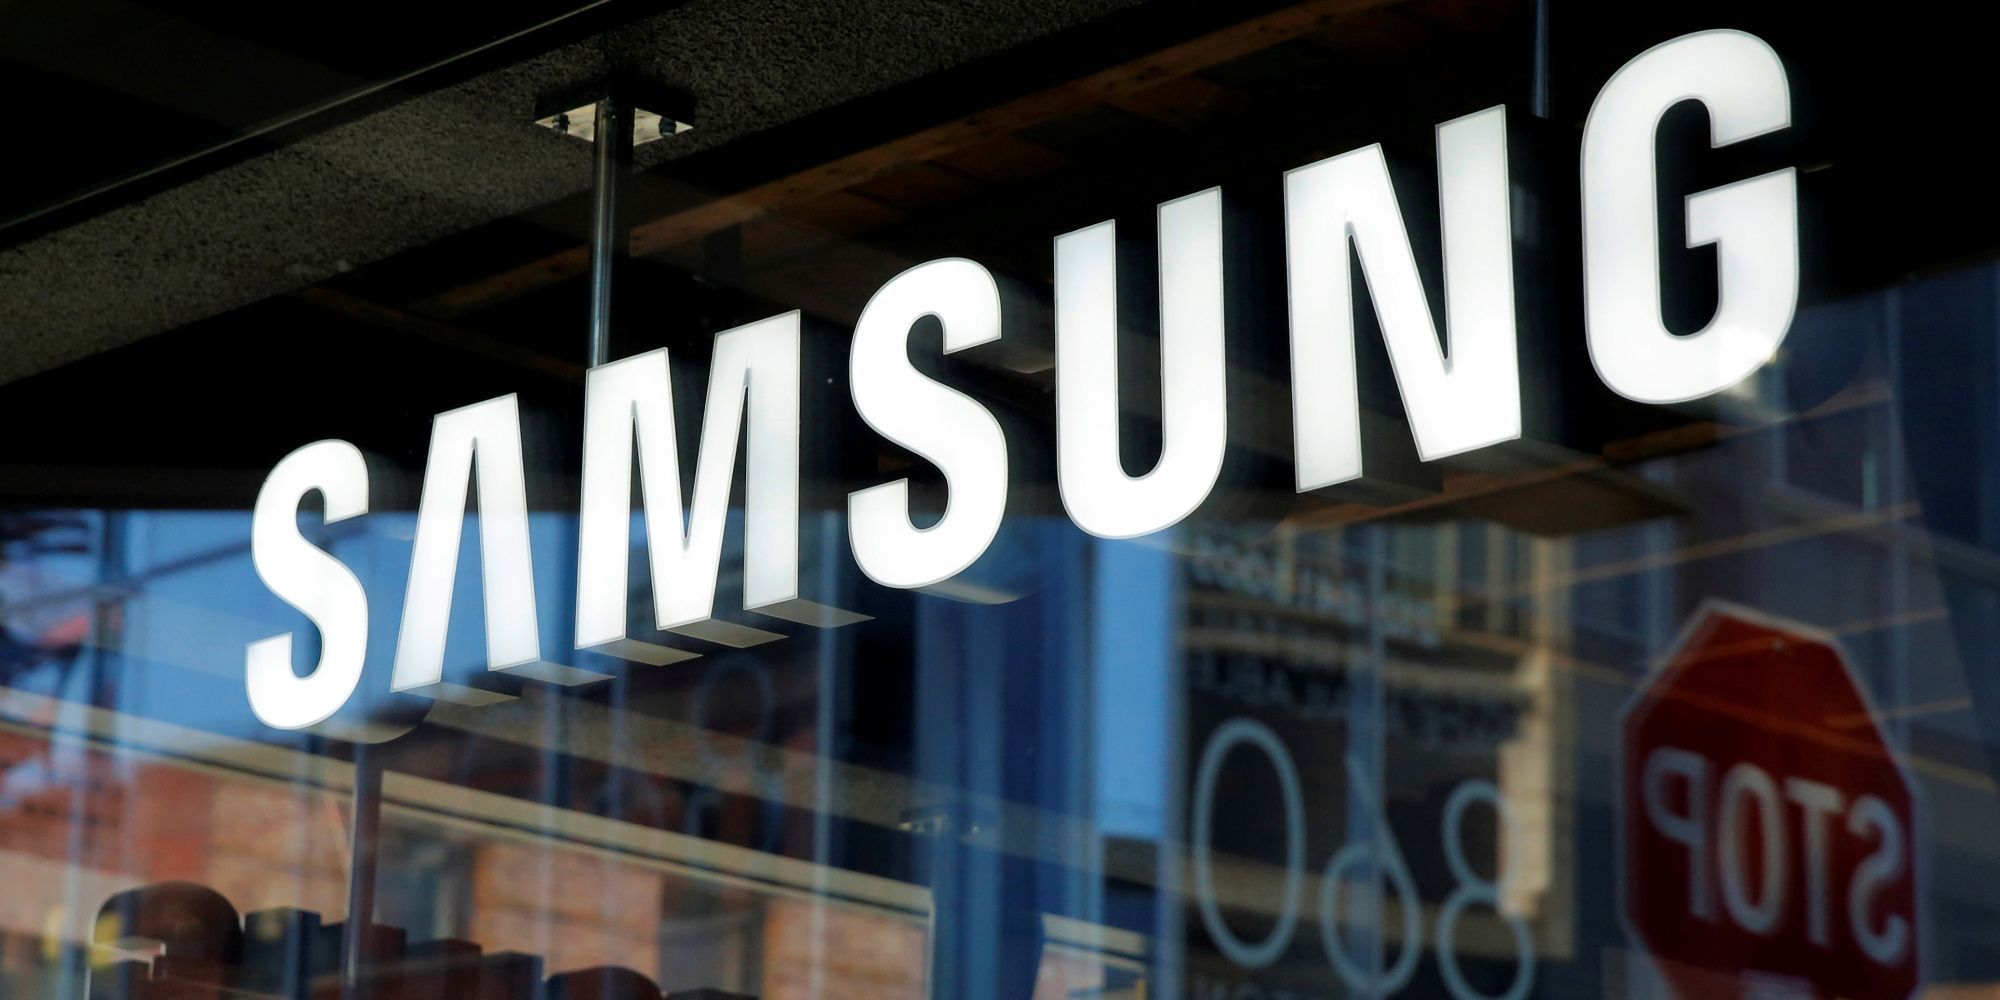 Koin yang Didukung Samsung Galaxy S10 Bertambah